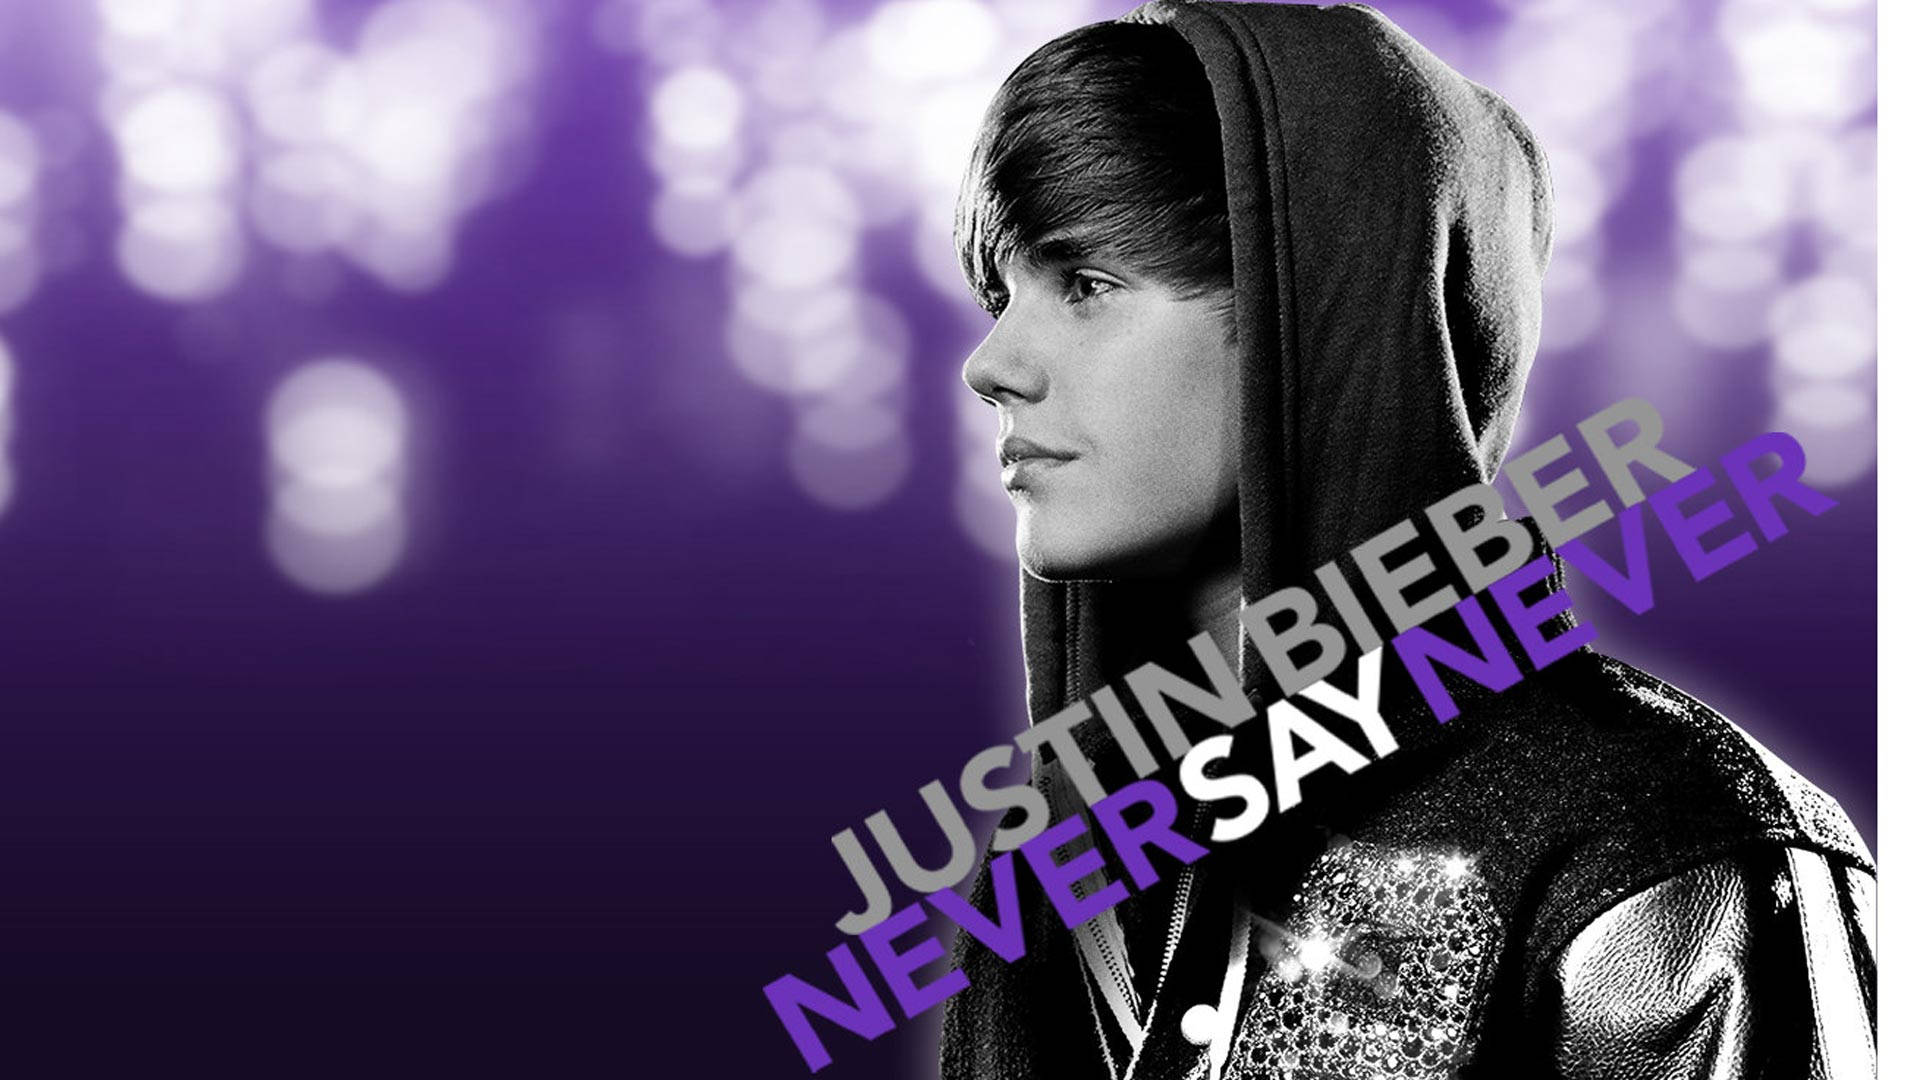 Justin Bieber Never Say Never Poster